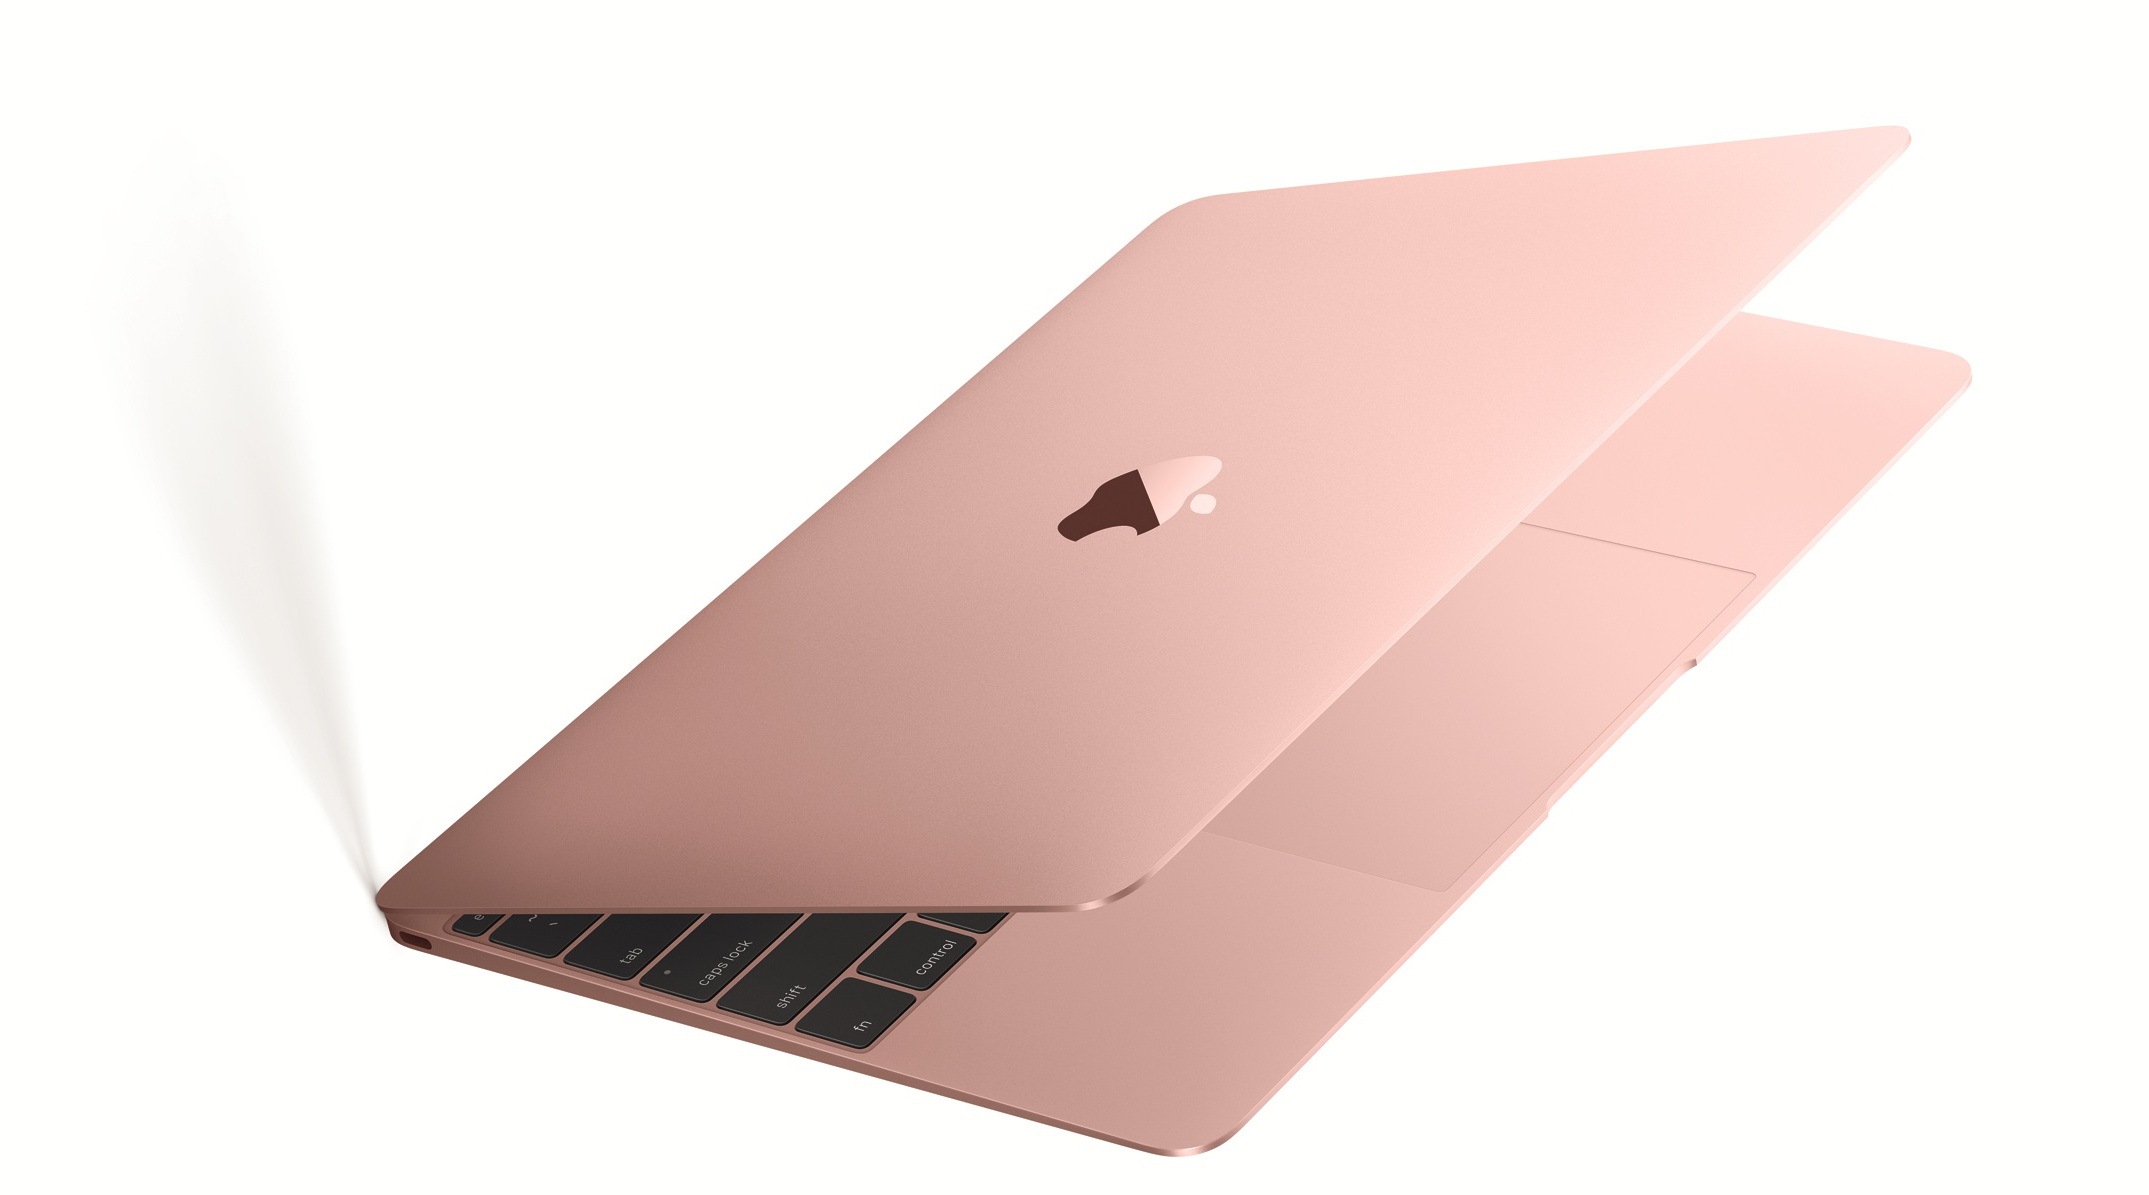 Apple Stops Selling 12-Inch MacBook Laptops